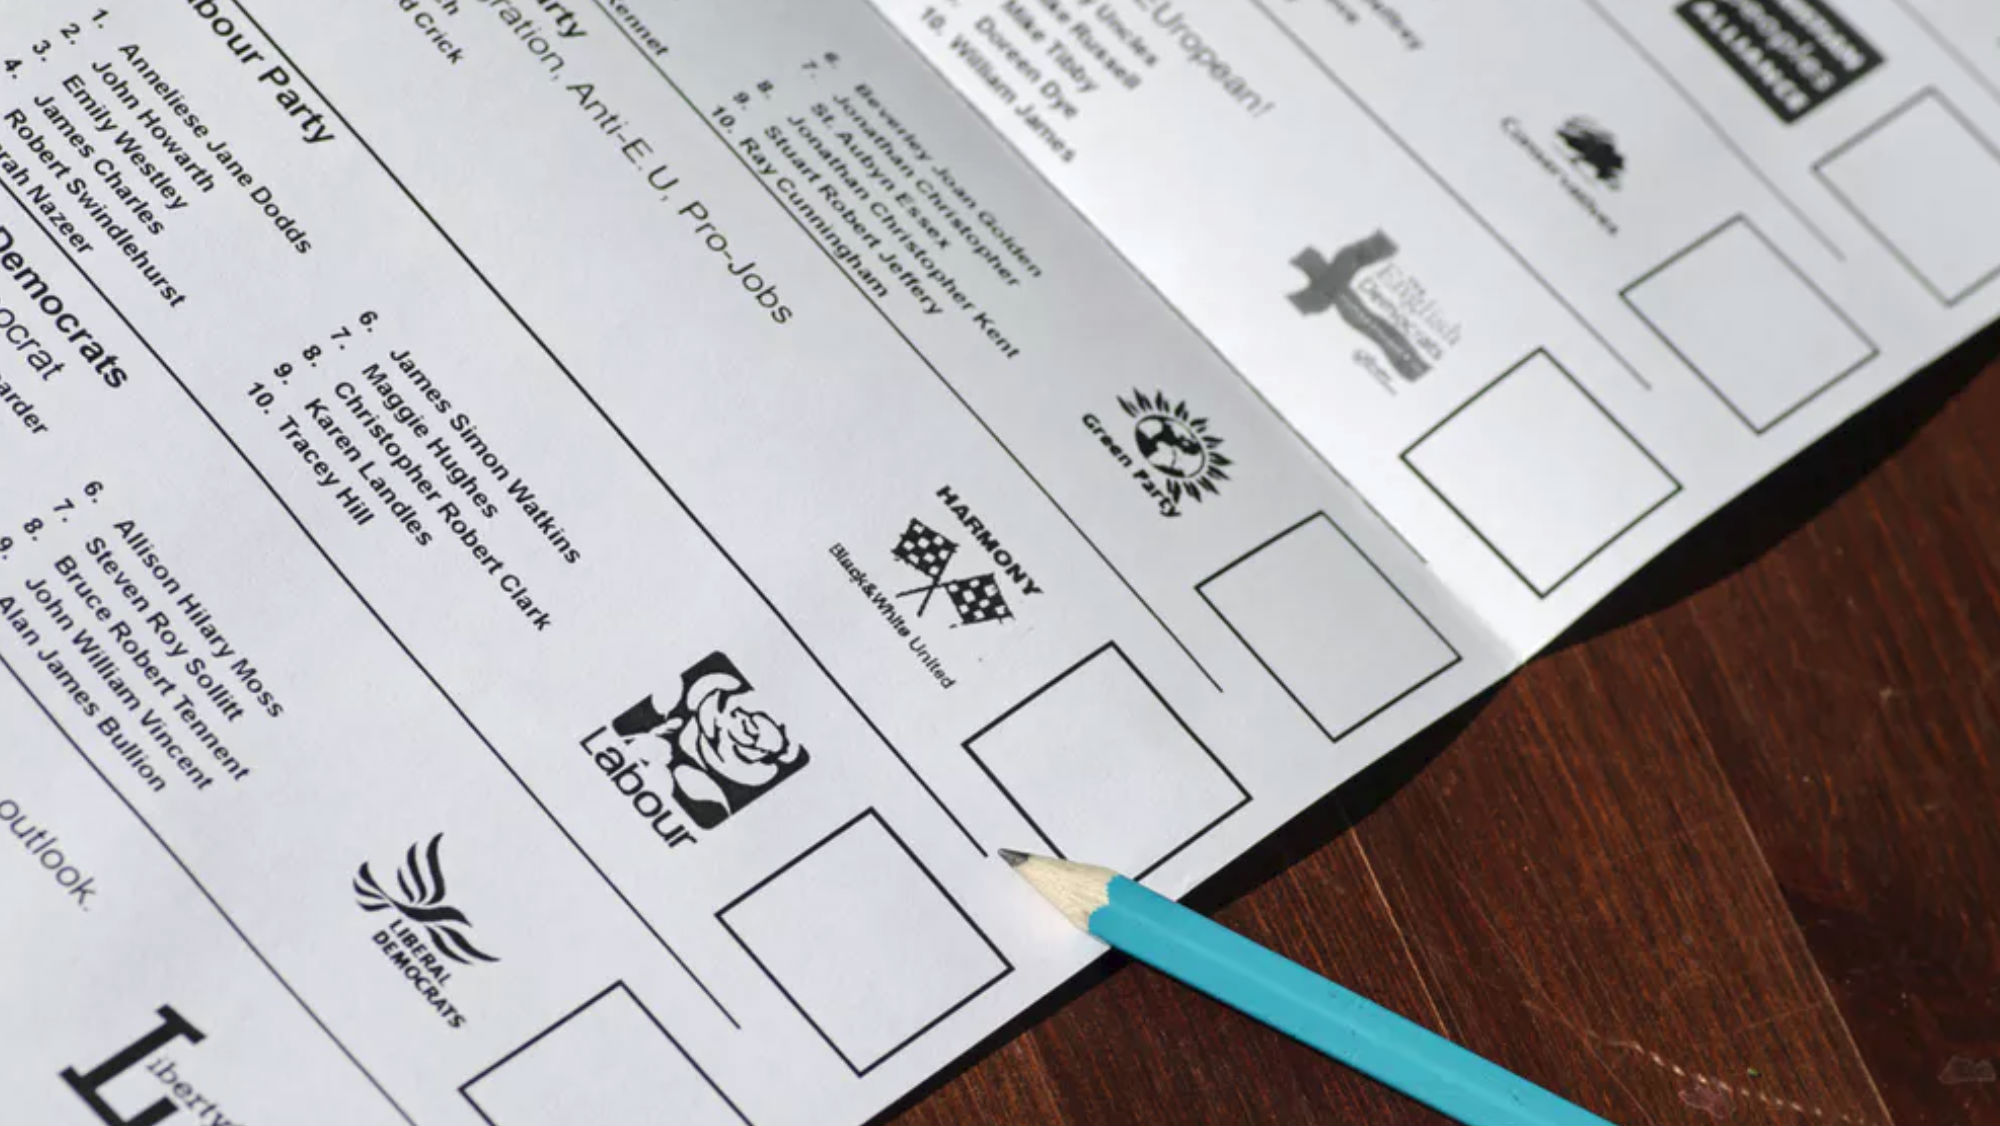 European elections ballot paper